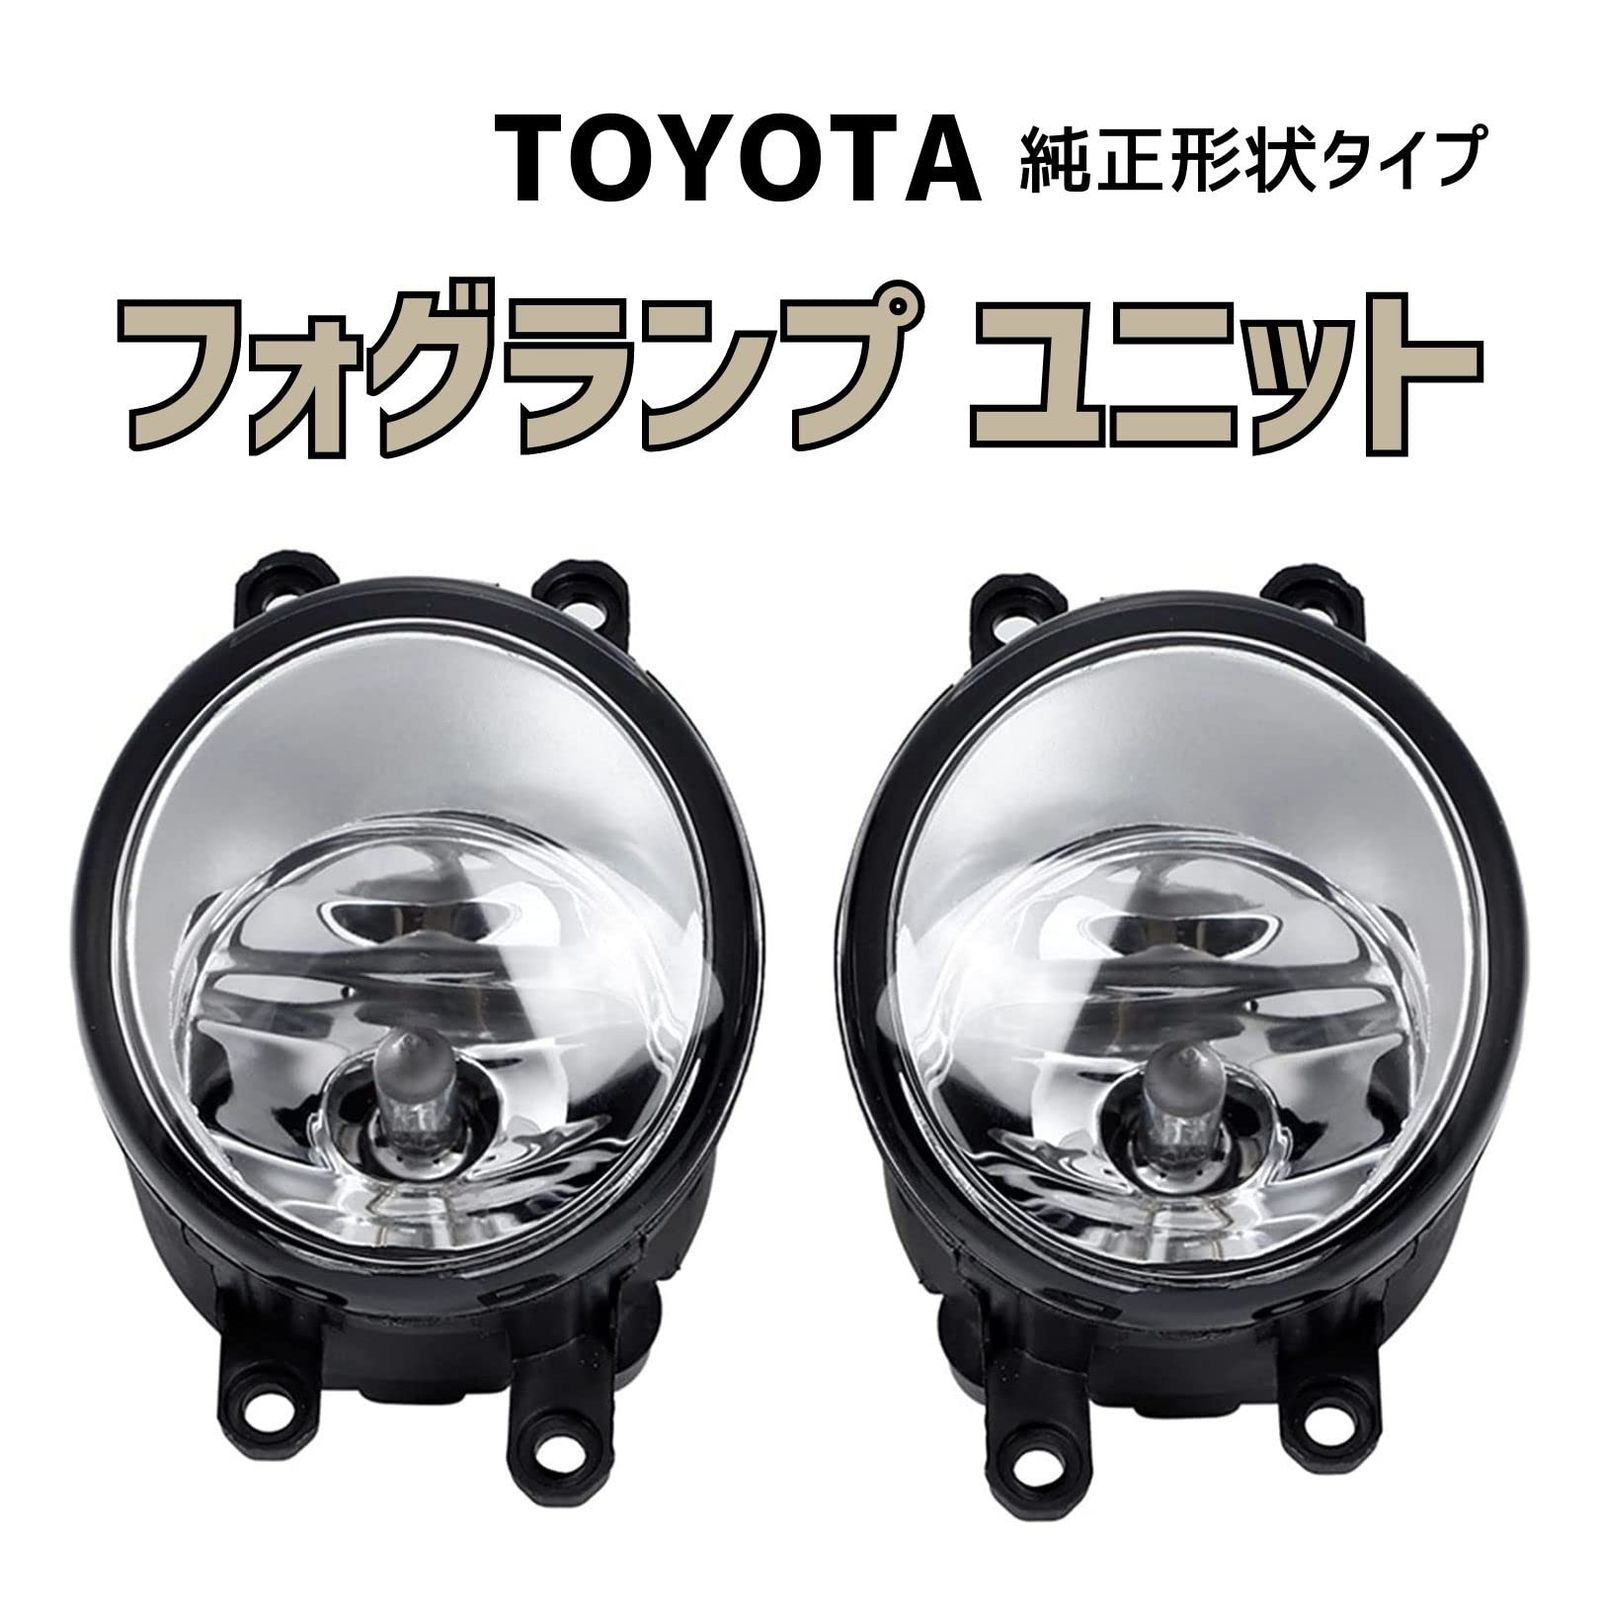 TOYOTAトヨタ ガラスレンズ フォグユニット H8 H11 H16 規格対応 LEDフォグランプ 装着車対応 防水 2個入